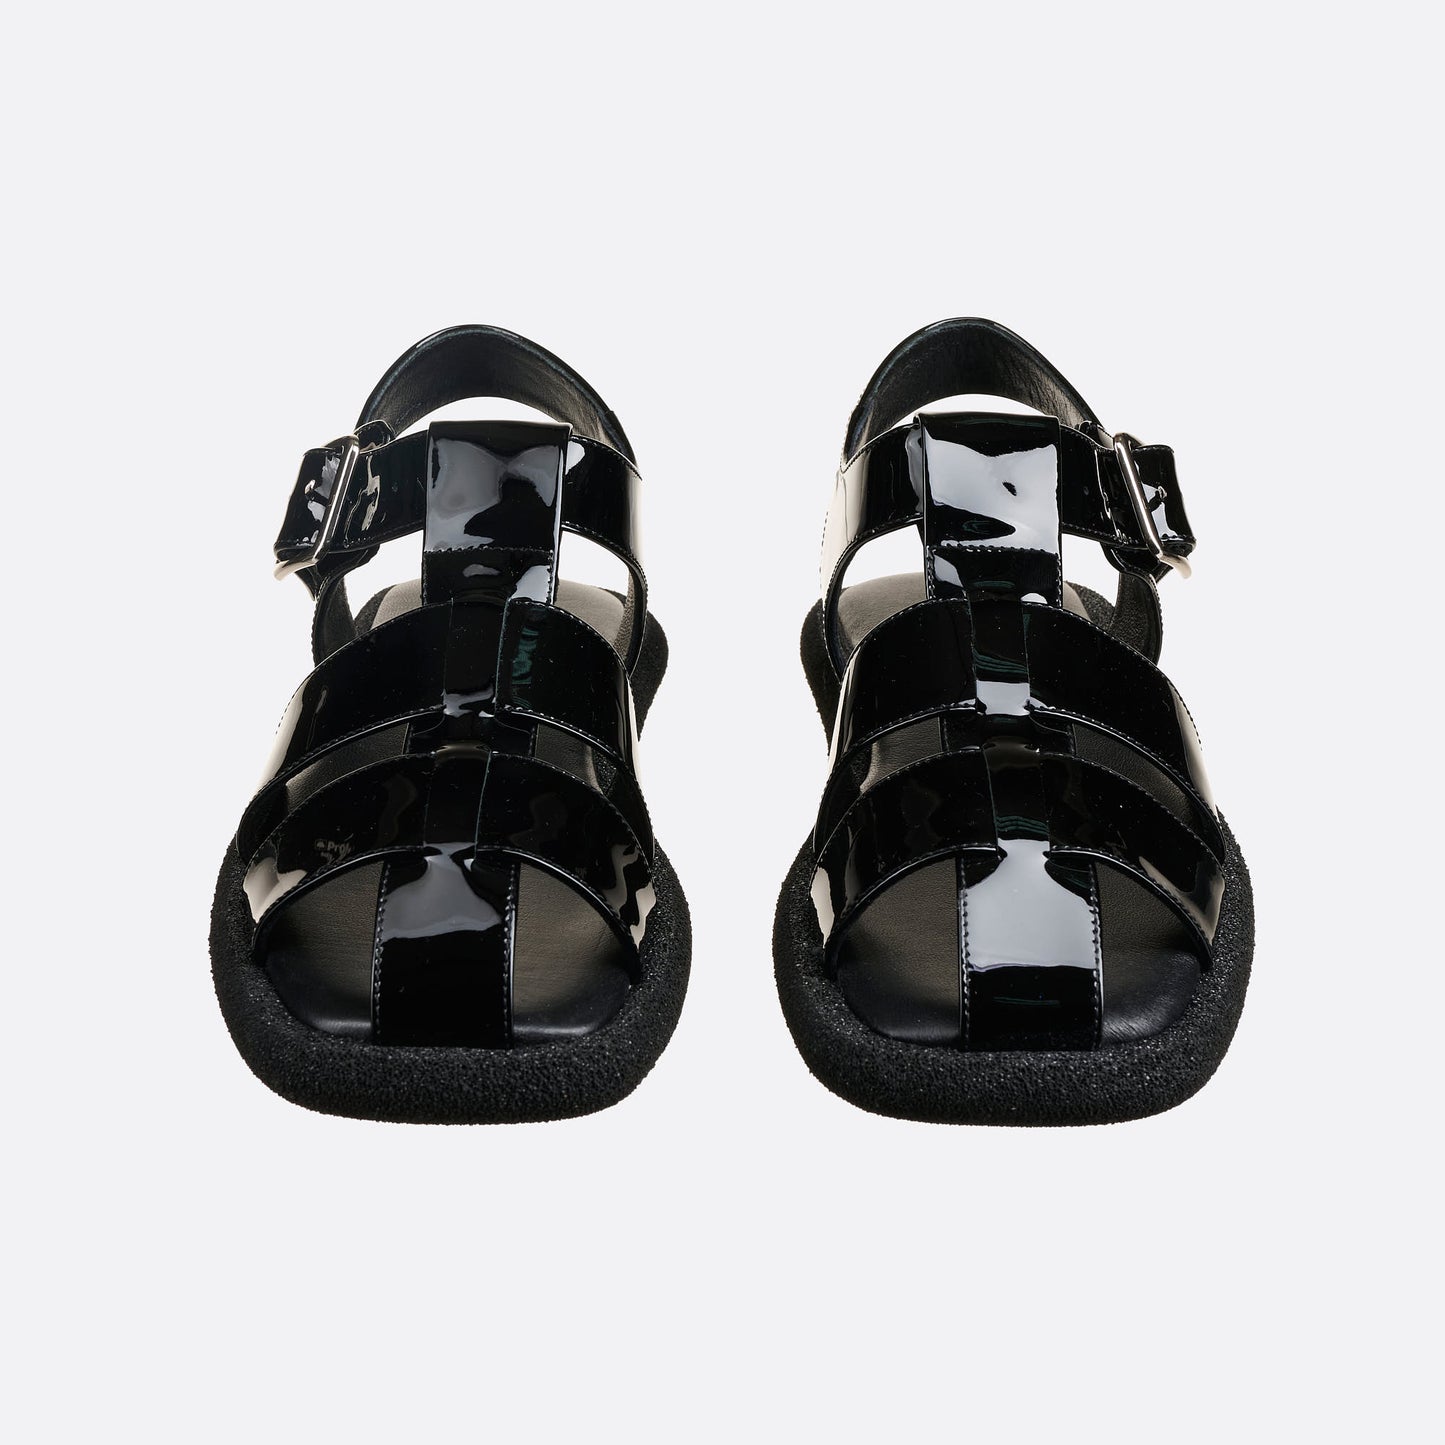 Obsidian Zenith Sandals